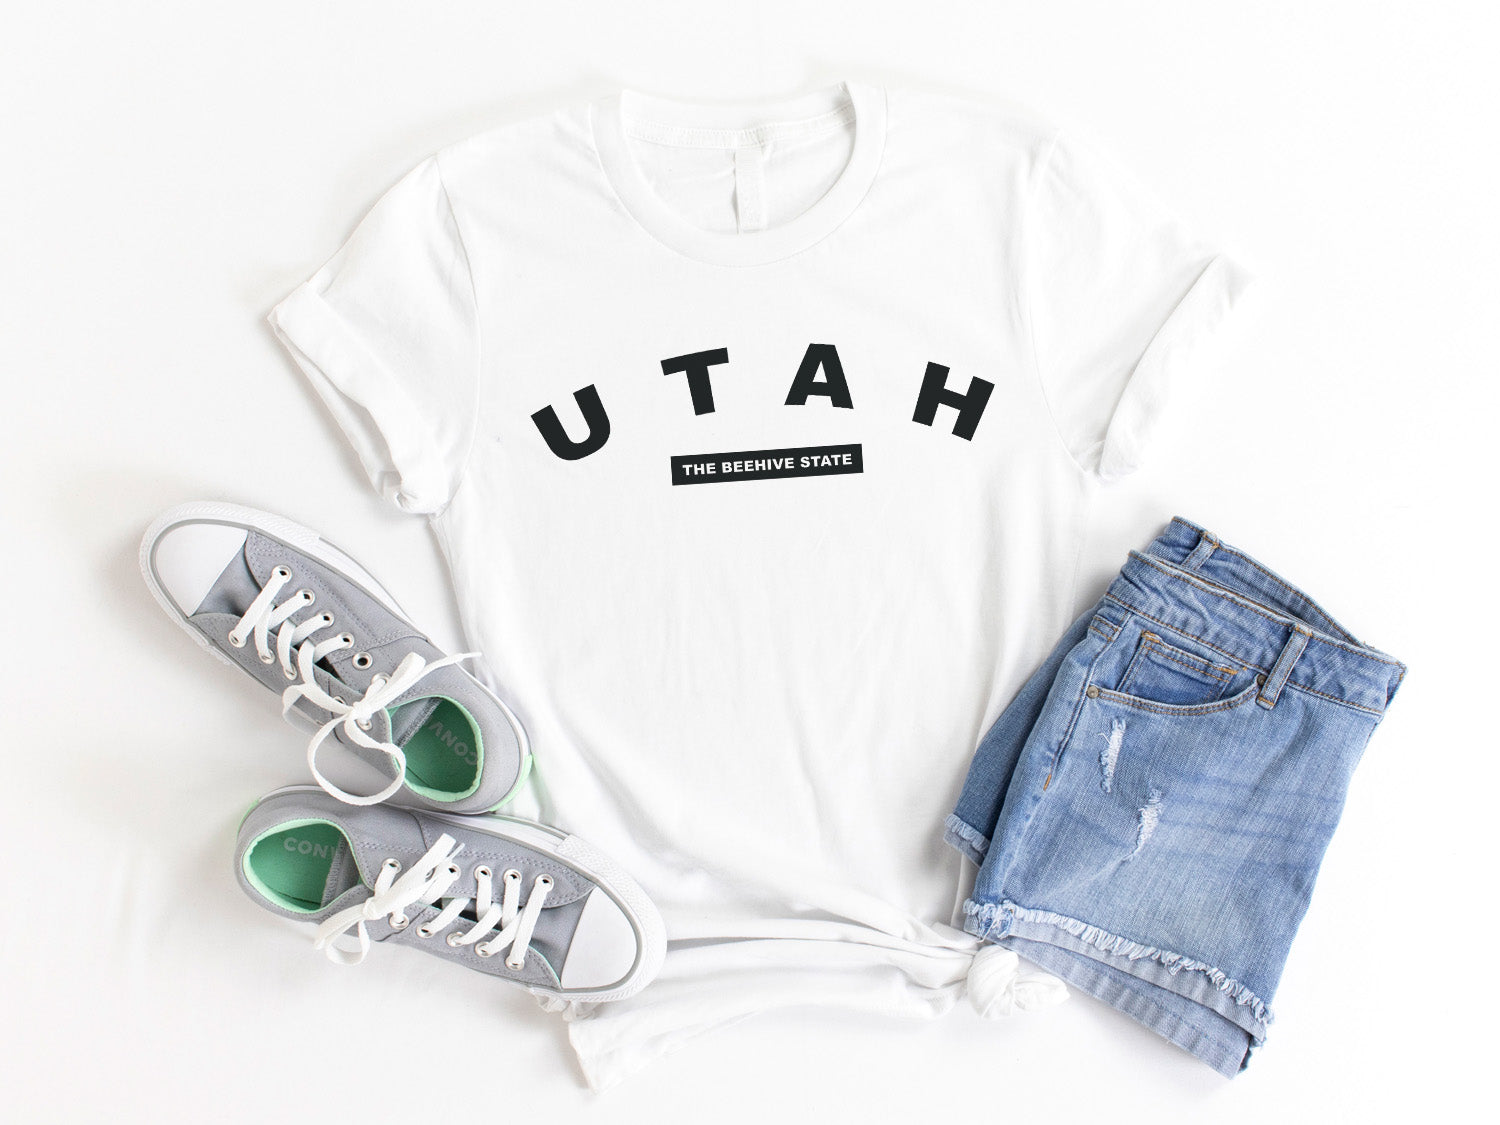 Utah The Beehive State T-shirt - United States Name & Slogan Minimal Design Printed Tee Shirt